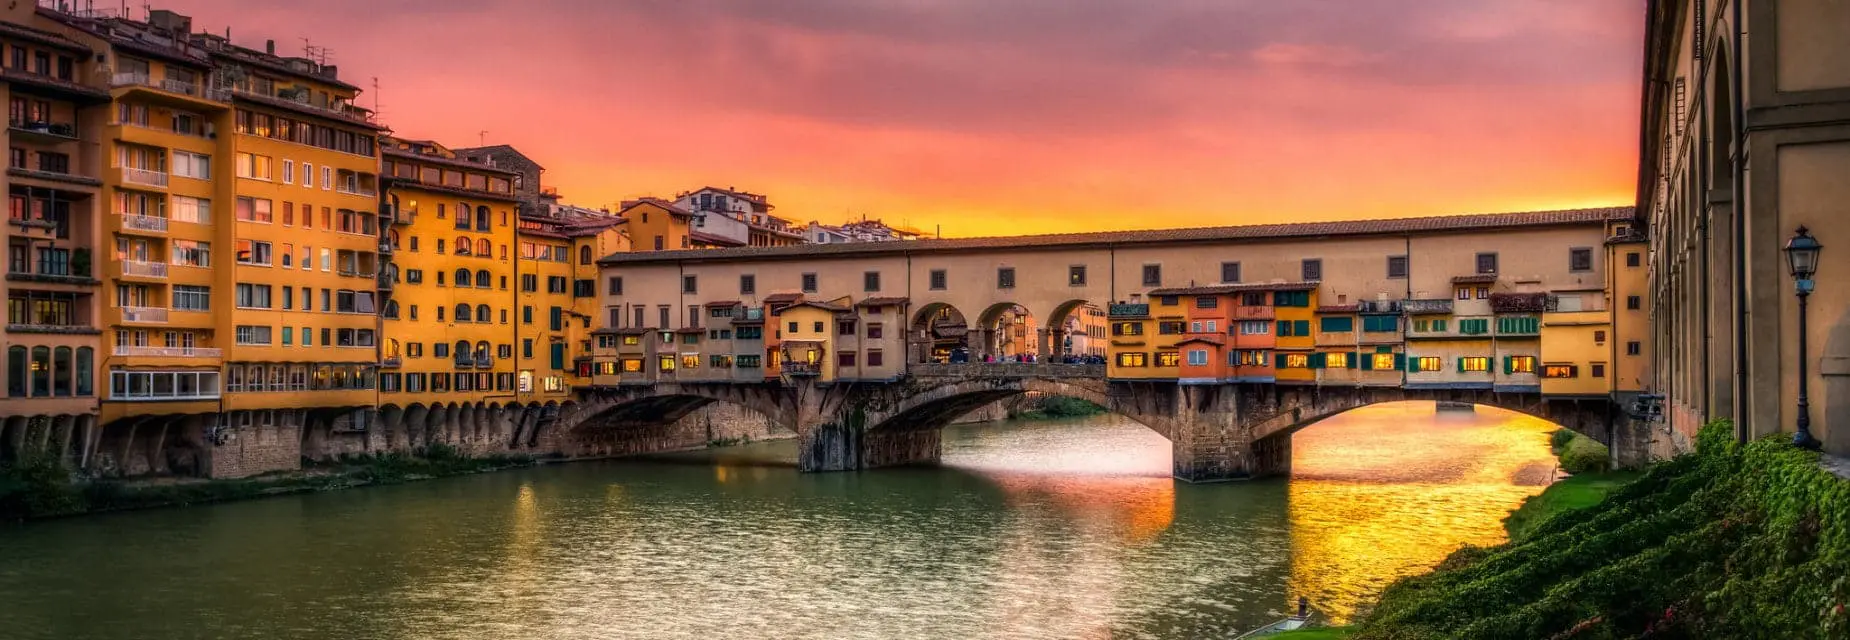 Ponte Vecchio Medieval Stone Bridge